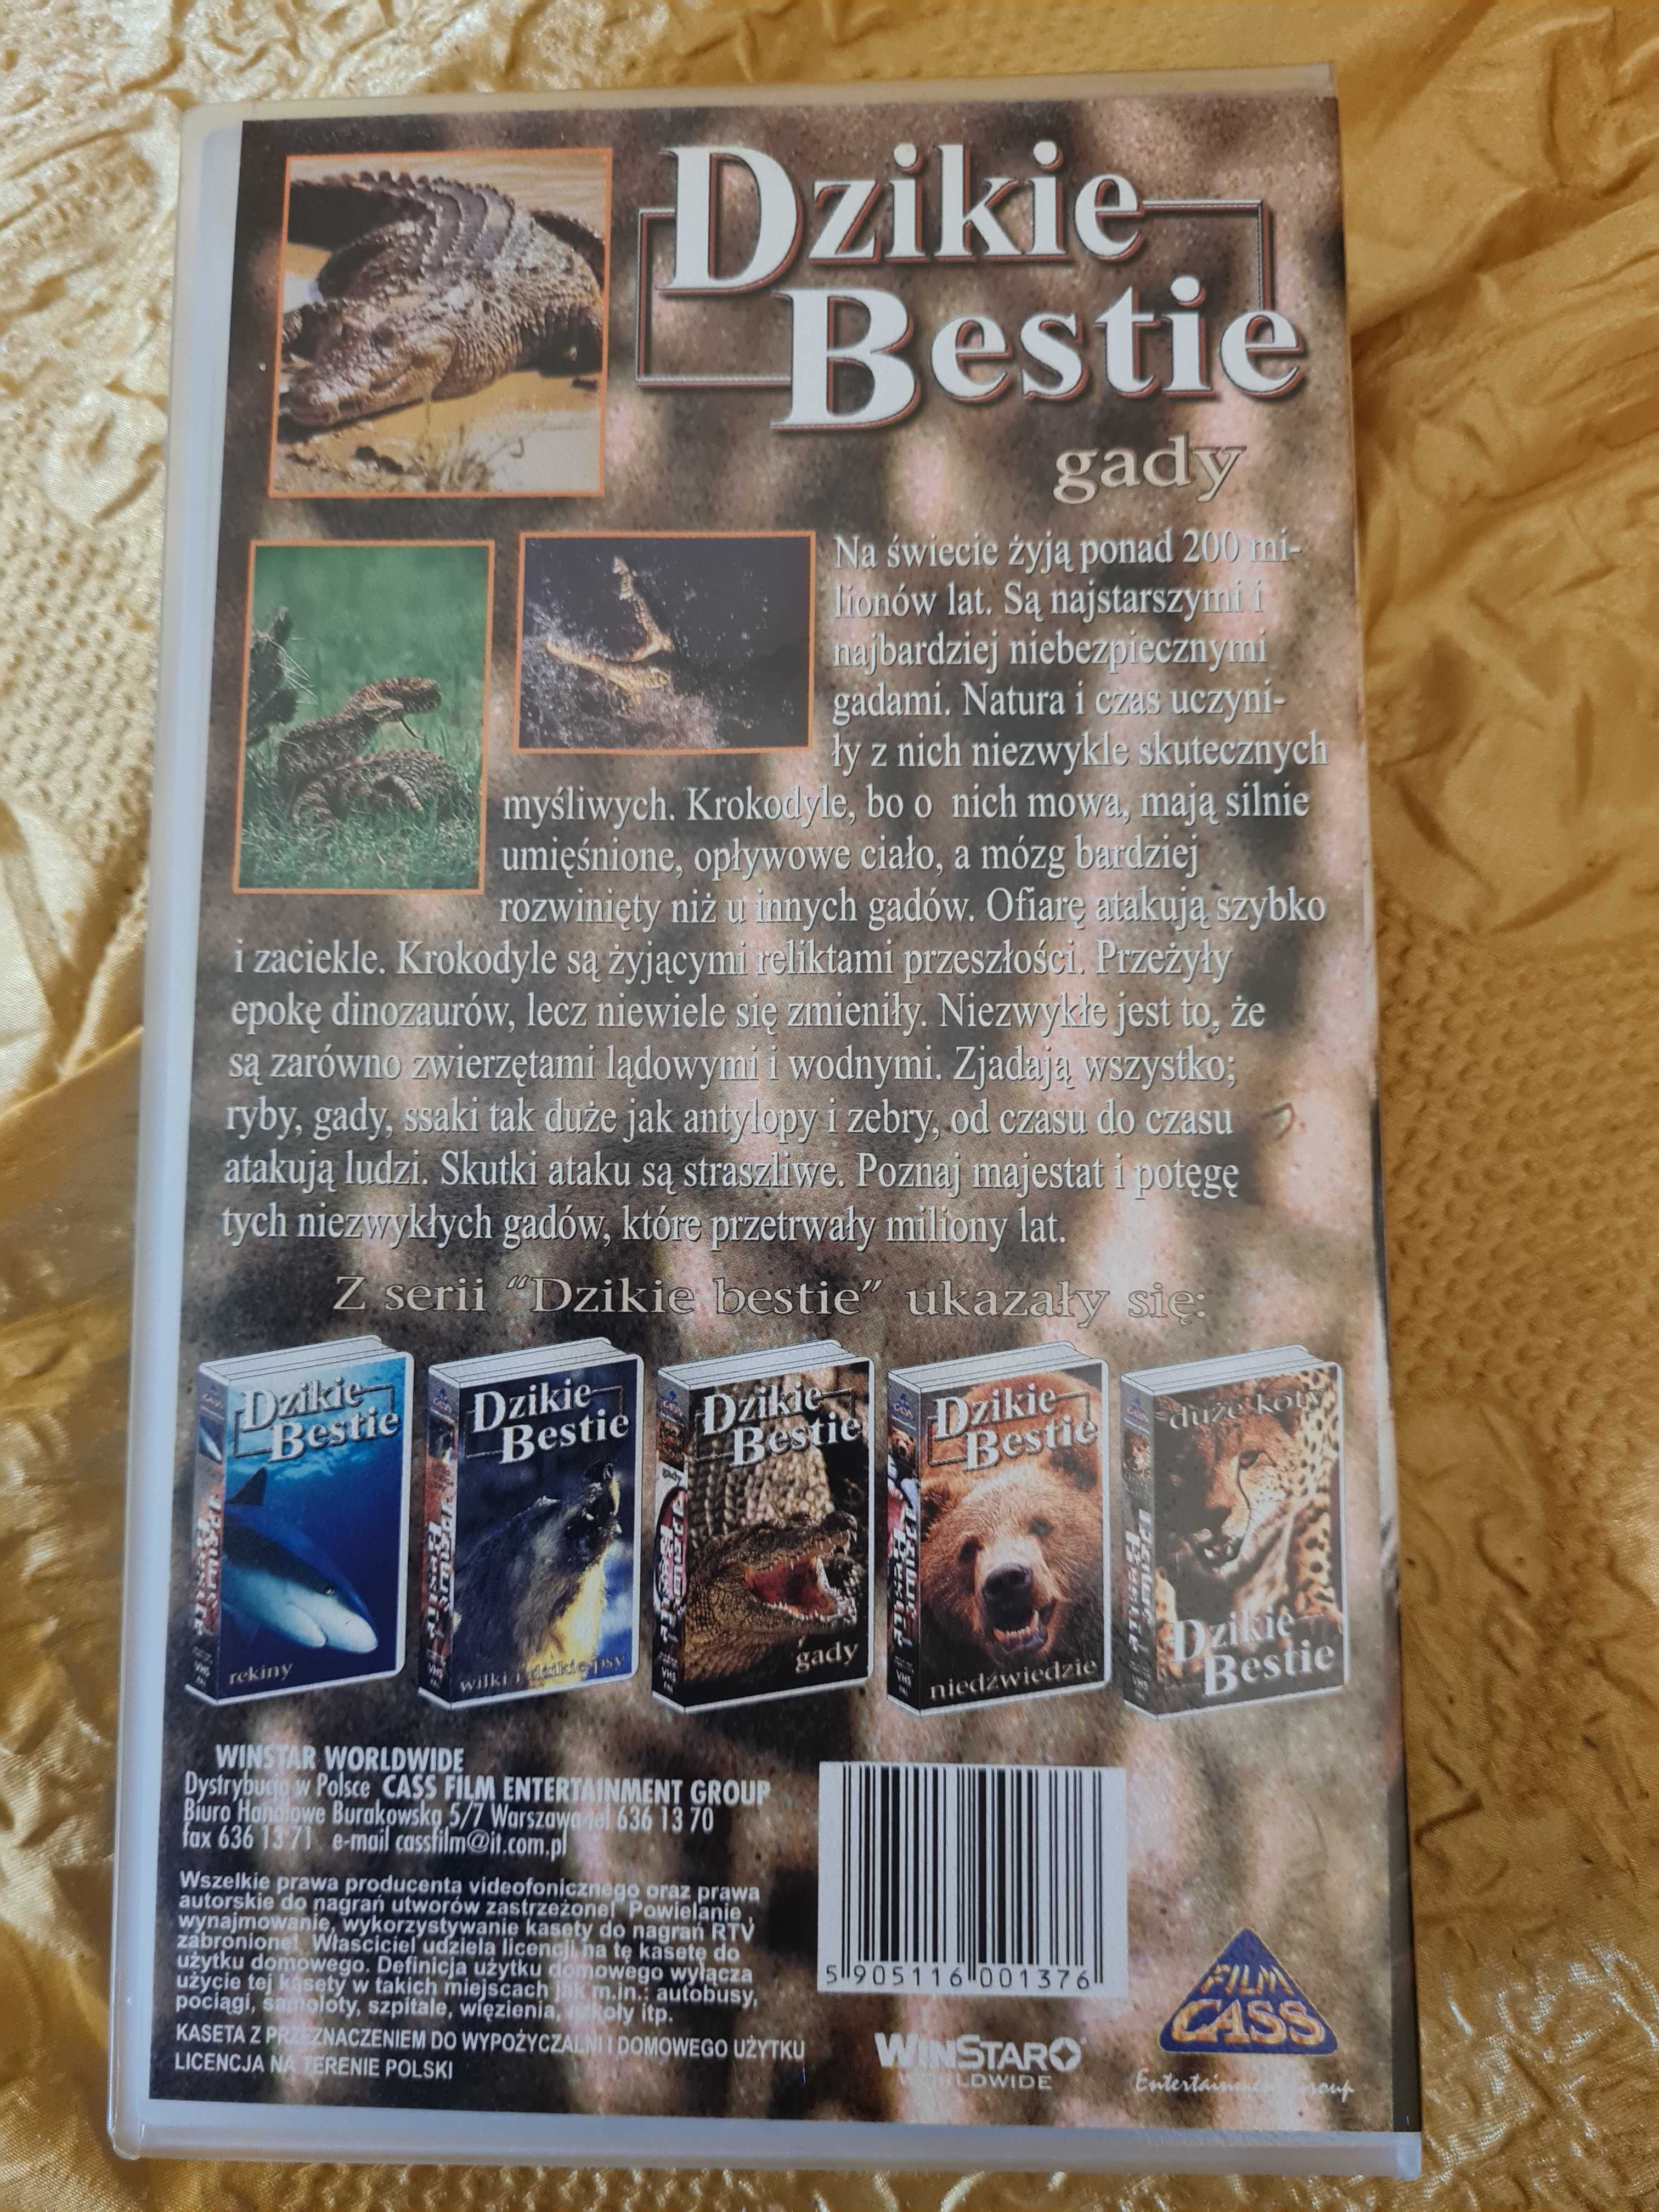 Dzikie bestie - gady kaseta VHS